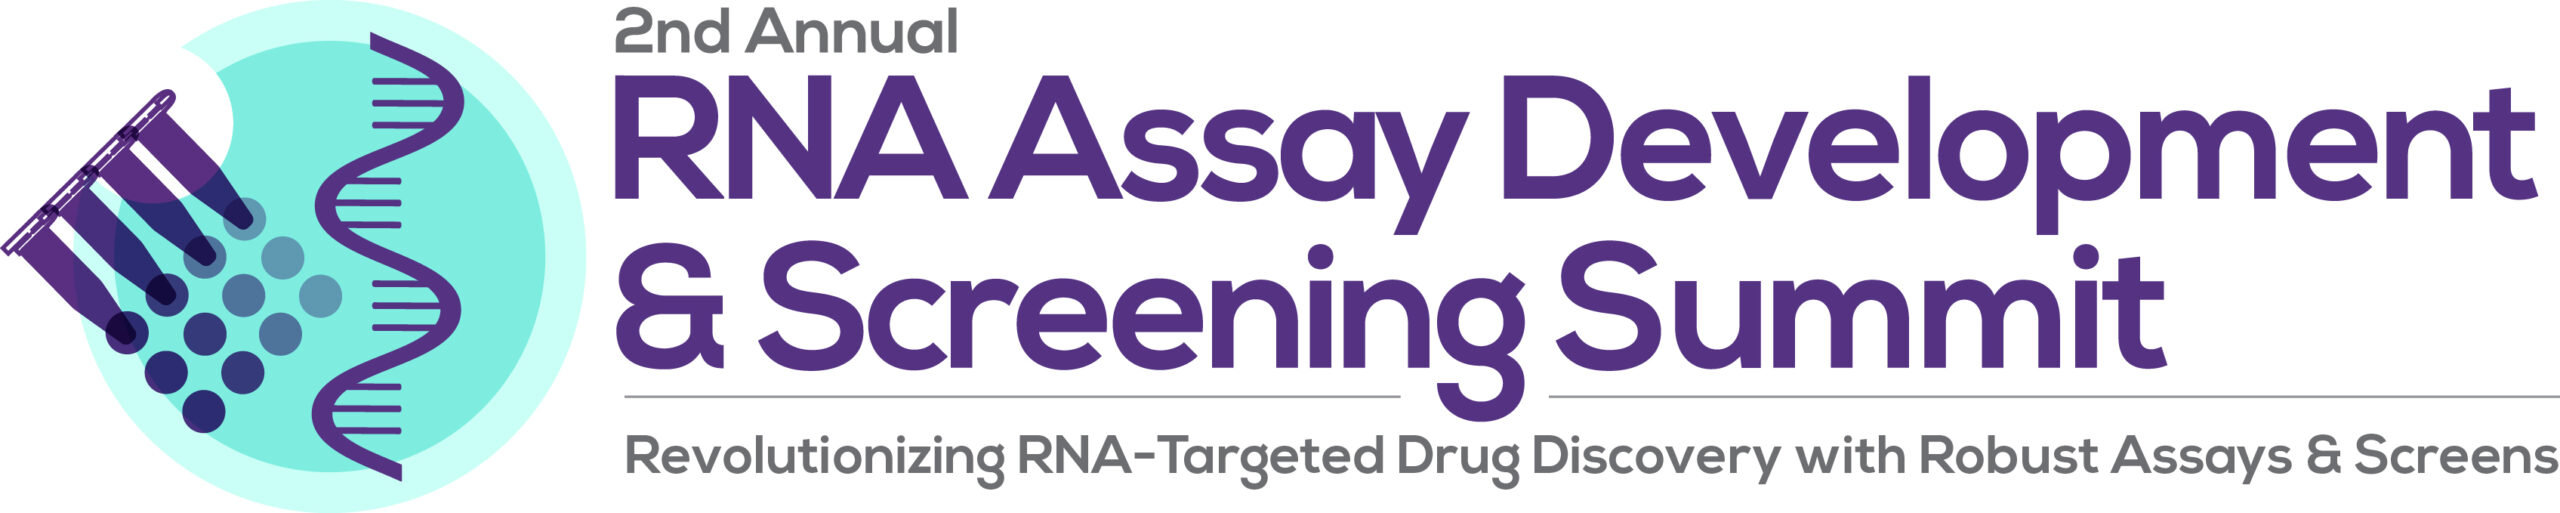 2nd Annual RNA ASSAY Development & Screening Summit STRAPLINE